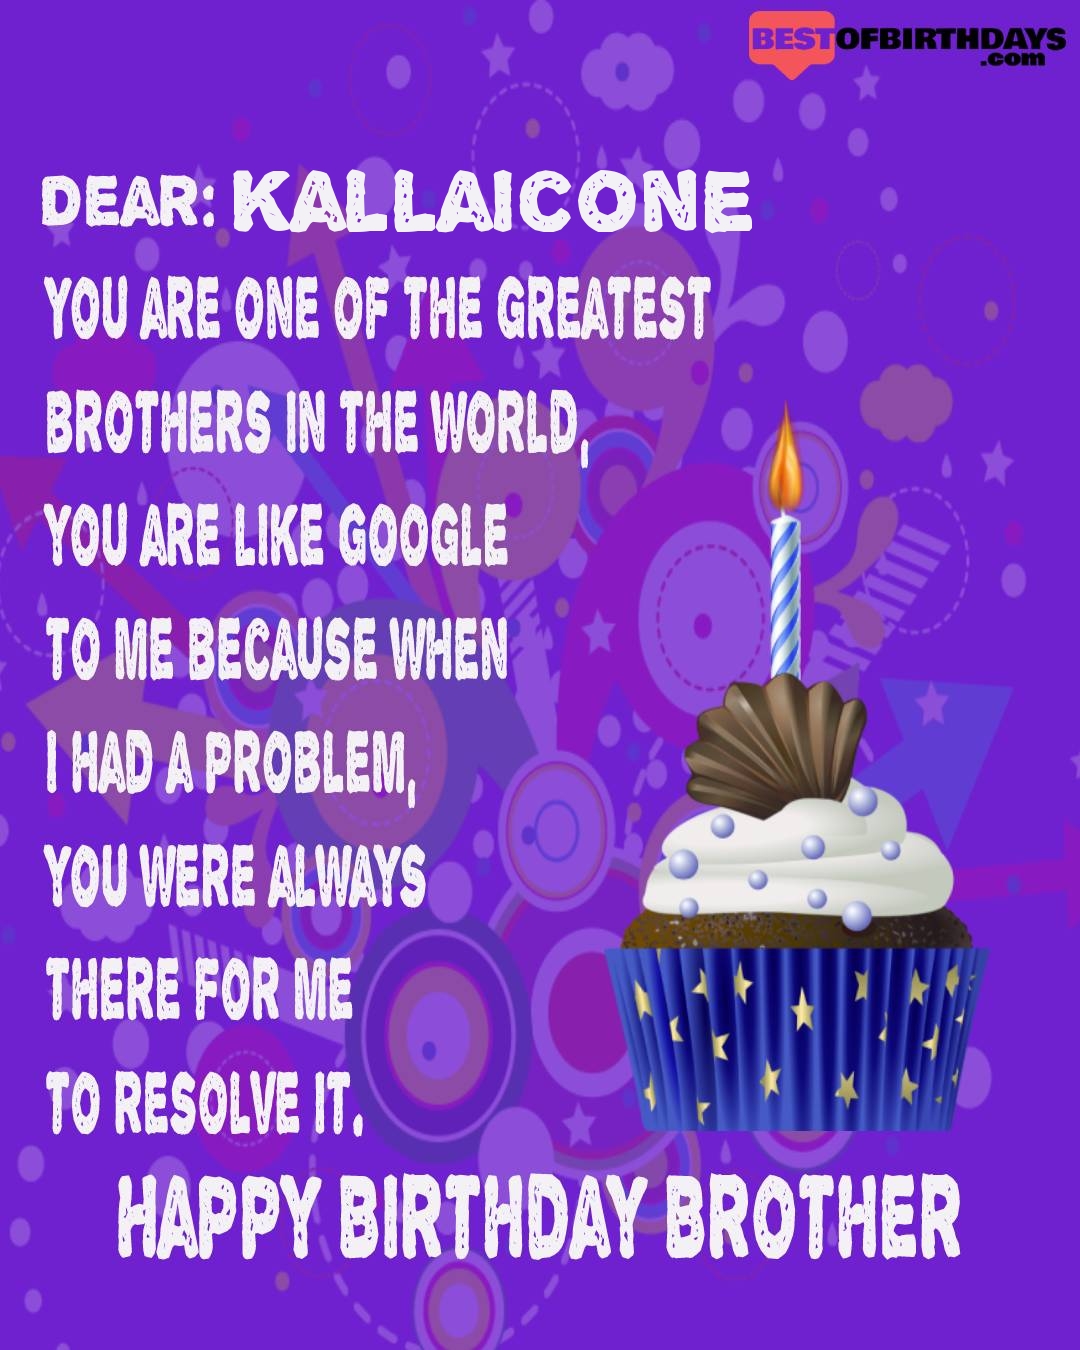 Happy birthday kallaicone bhai brother bro